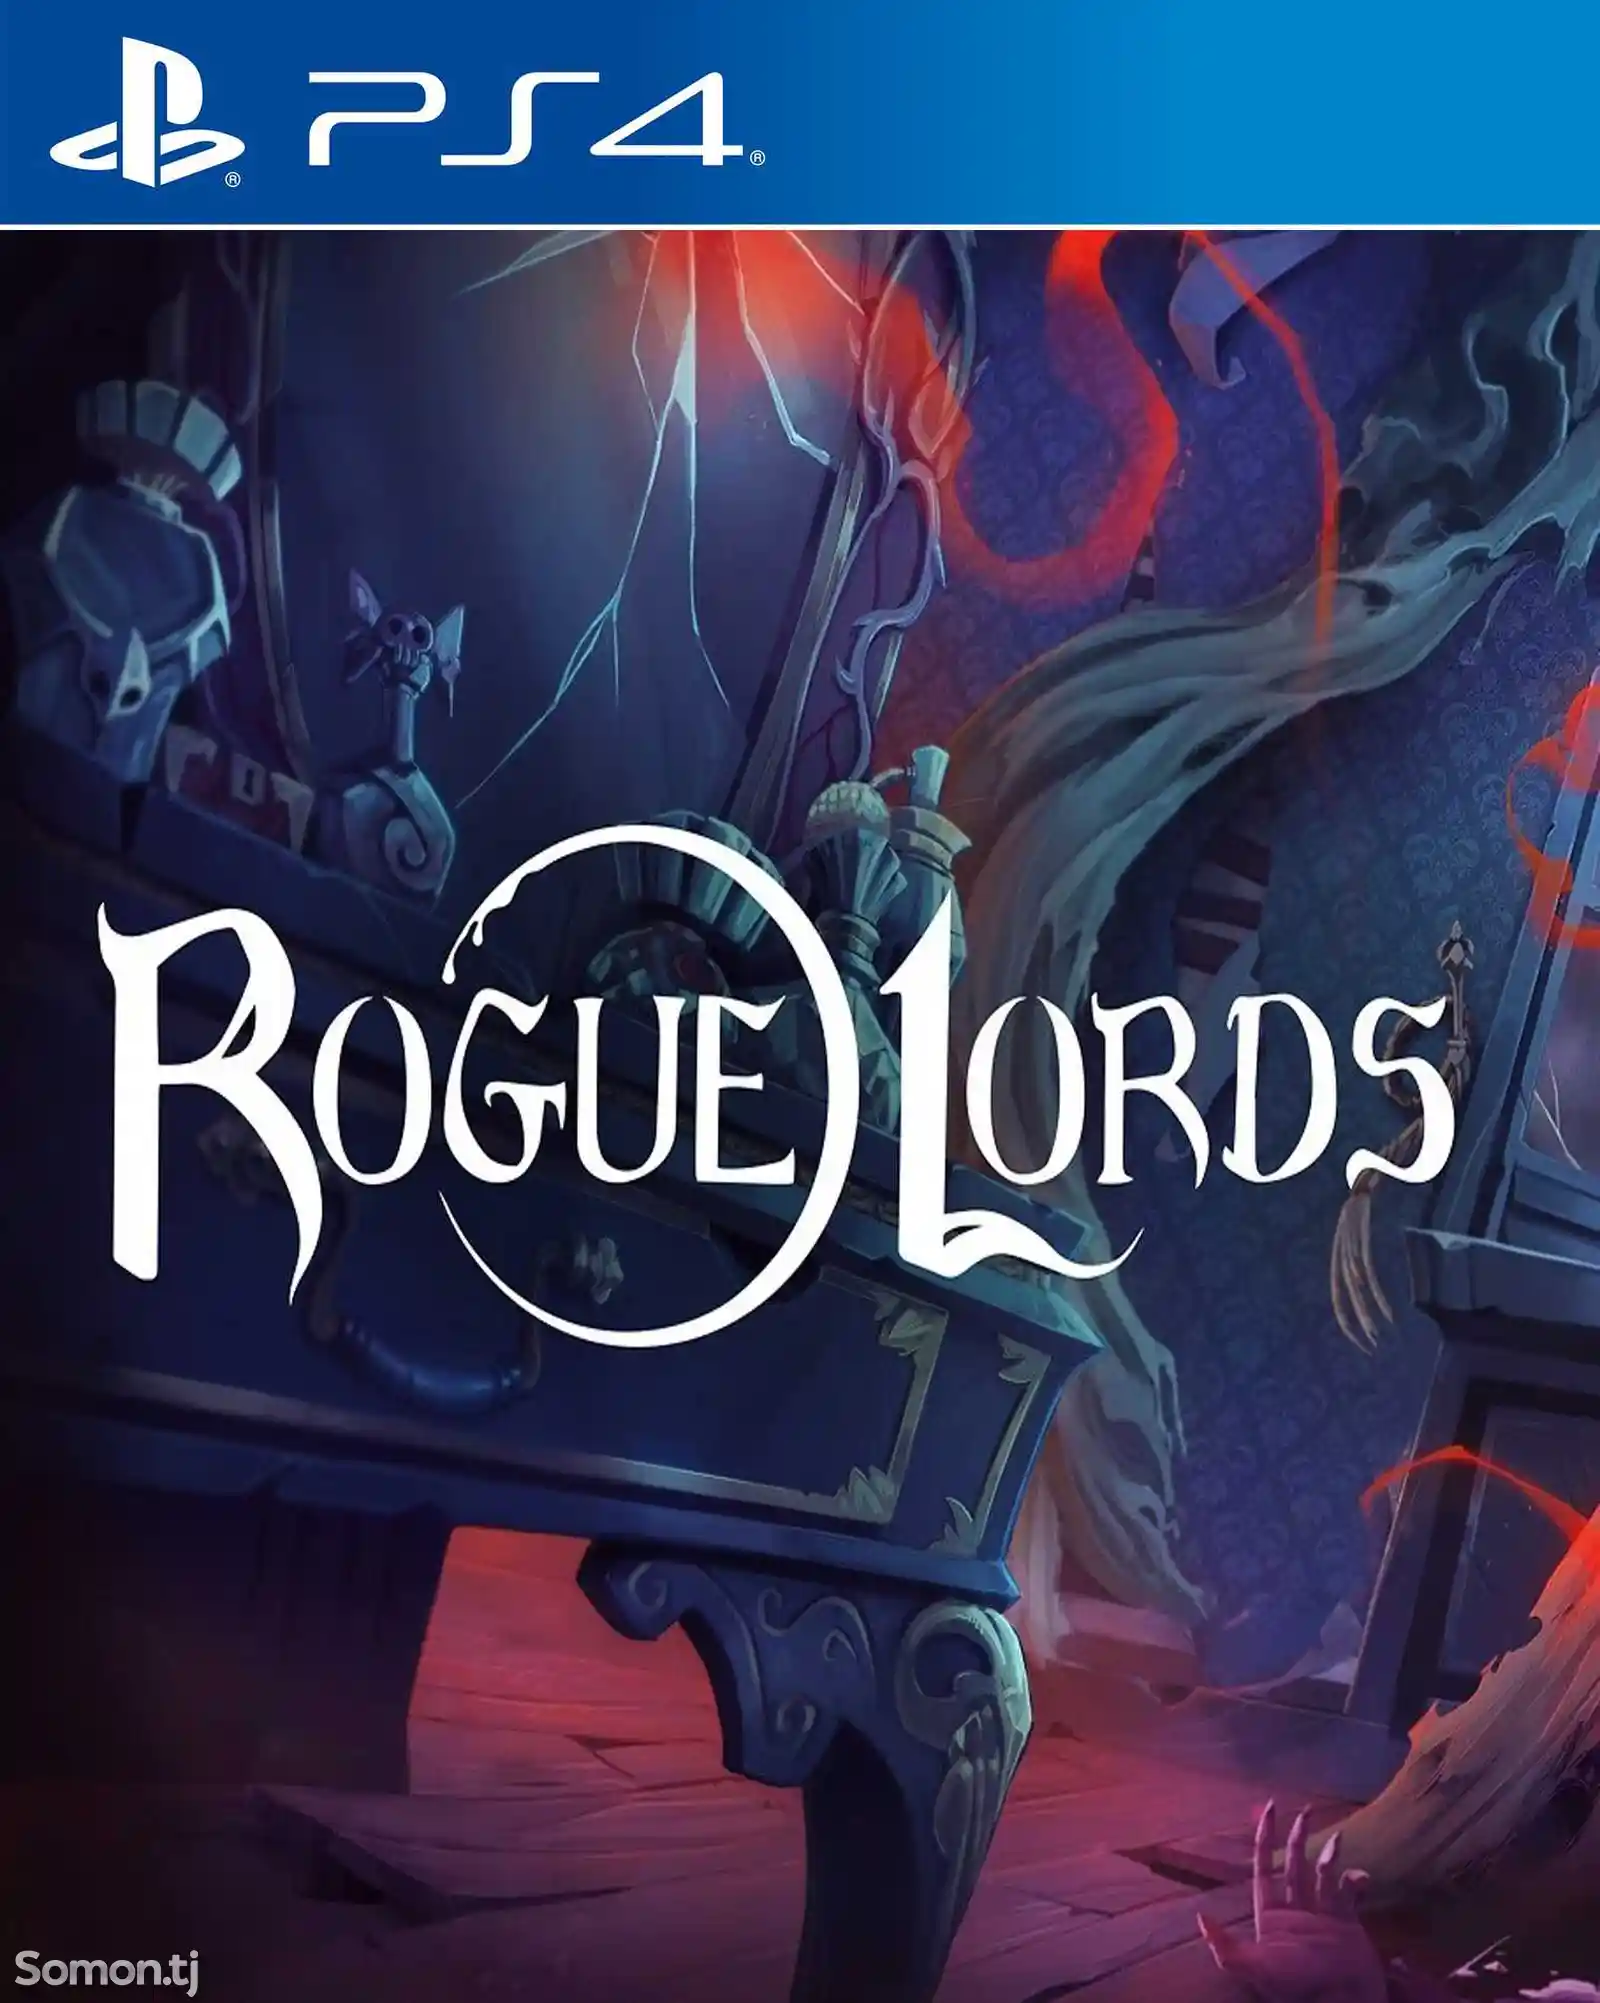 Игра Rogue lords для PS-4 / 5.05 / 6.72 / 7.02 / 7.55 / 9.00 /-1